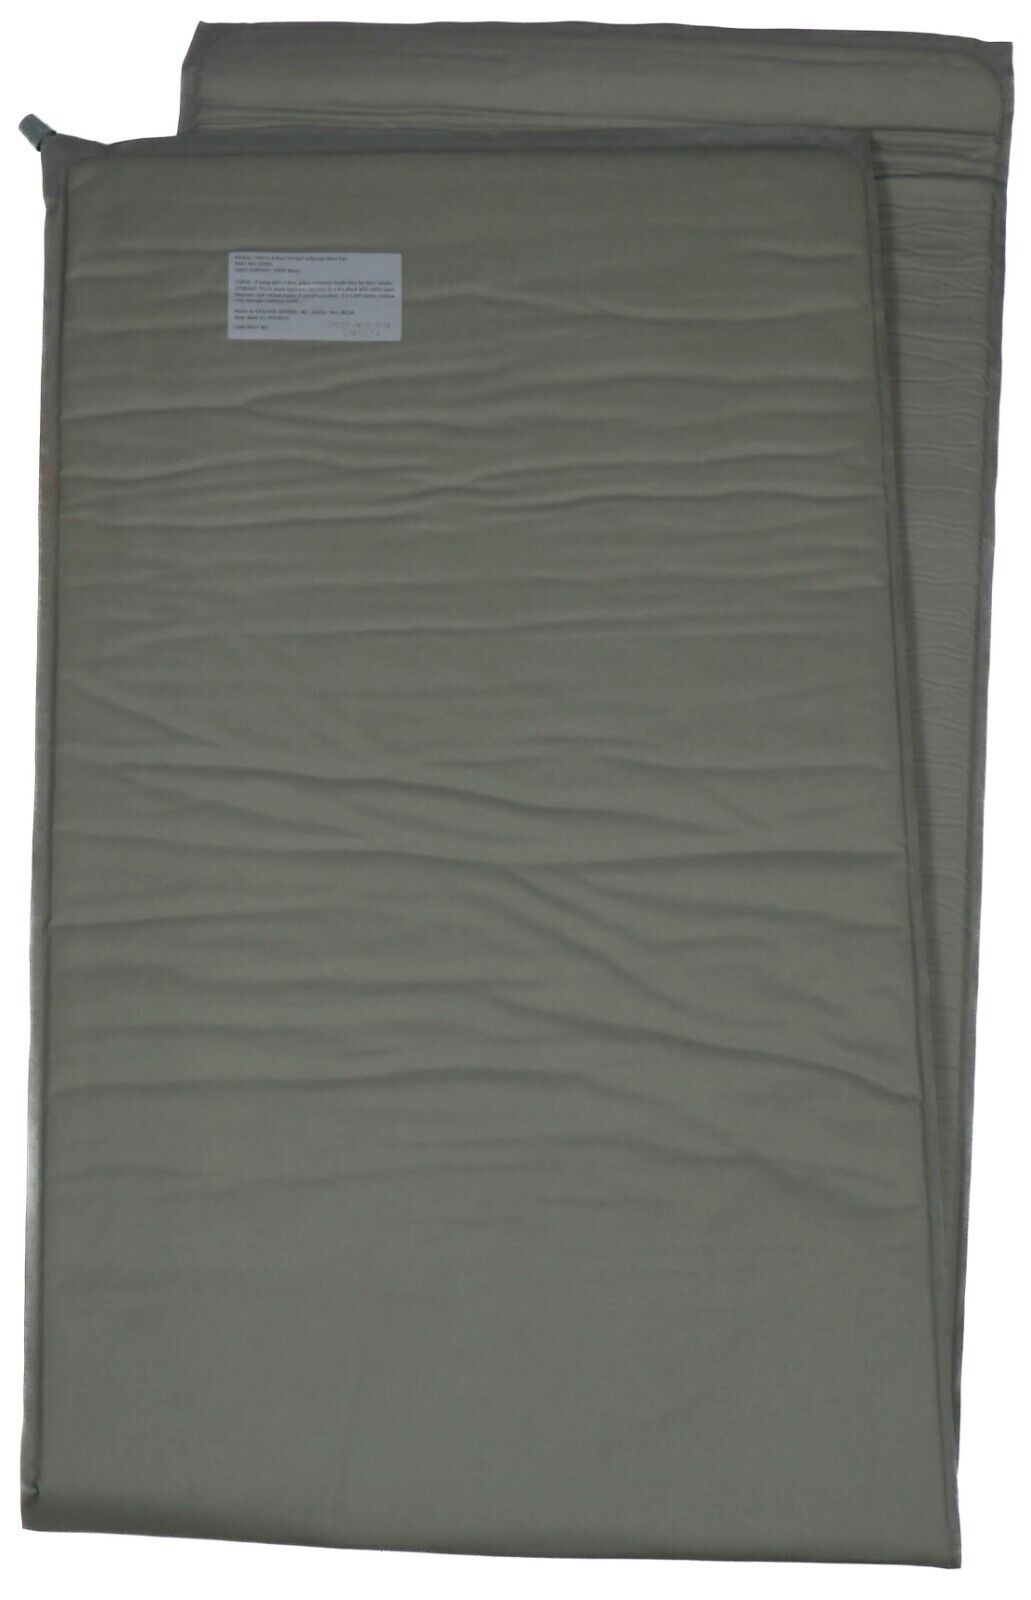 DAMAGED Therm-A-Rest Foliage Green Self-Inflating Sleeping Mattress Army Mat